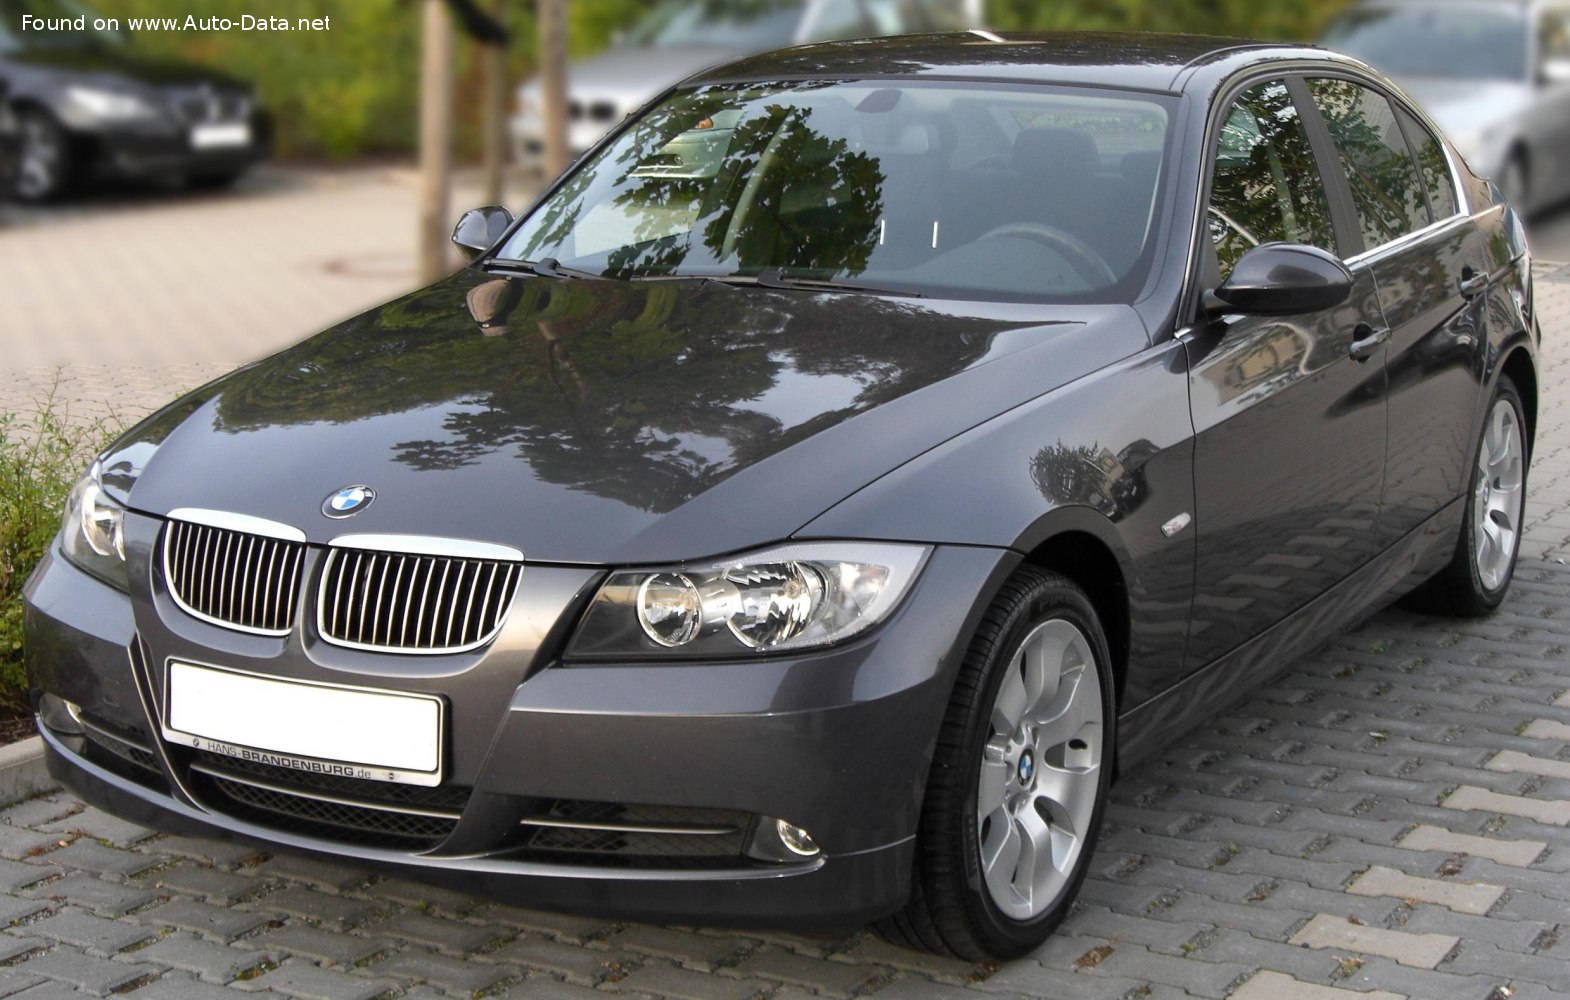 https://www.auto-data.net/images/f122/BMW-3-Series-Sedan-E90.jpg